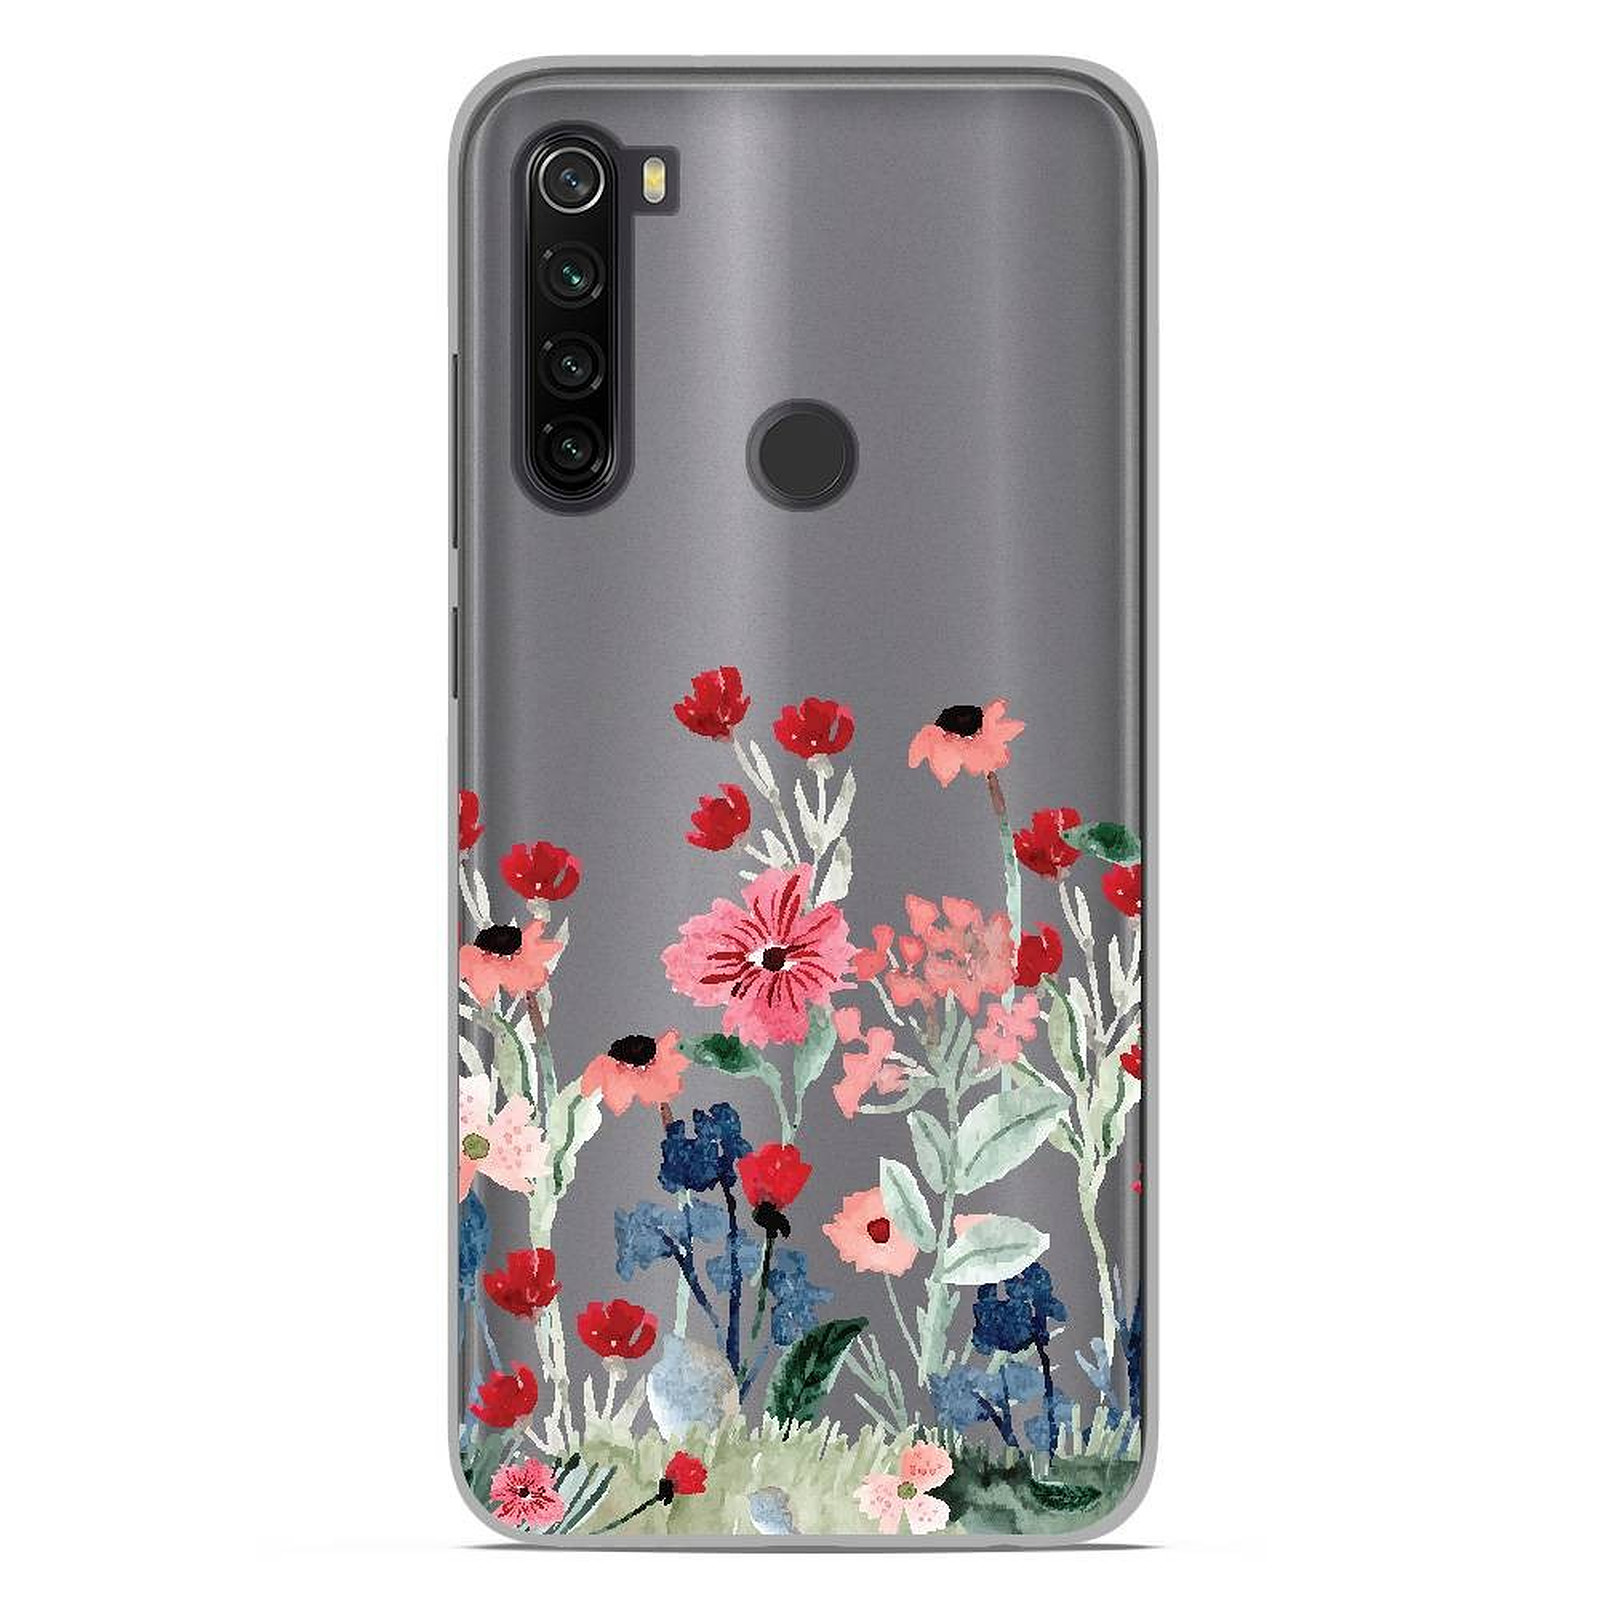 1001 Coques Coque silicone gel Xiaomi Redmi Note 8T motif Printemps en fleurs - Coque telephone 1001Coques